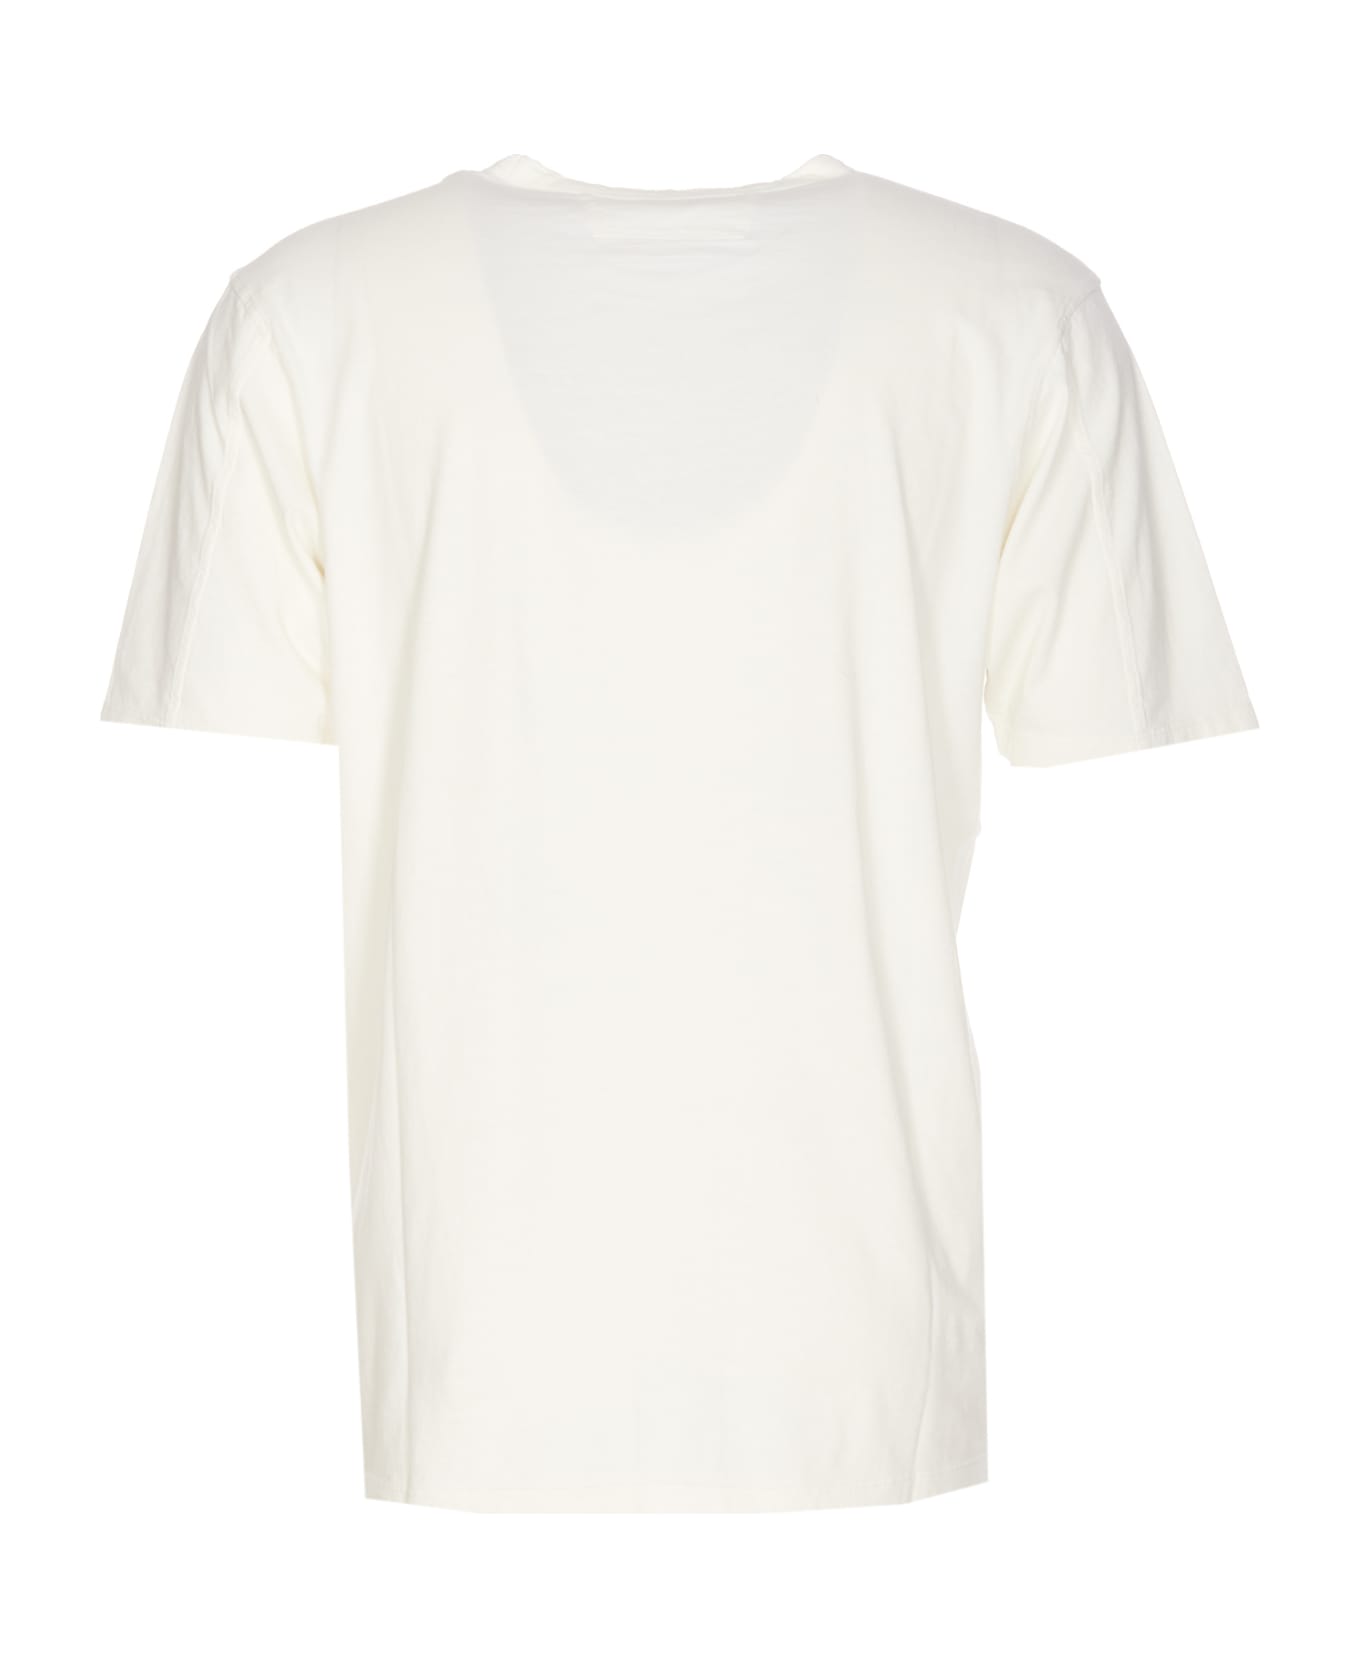 C.P. Company Logo T-shirt - Bianco